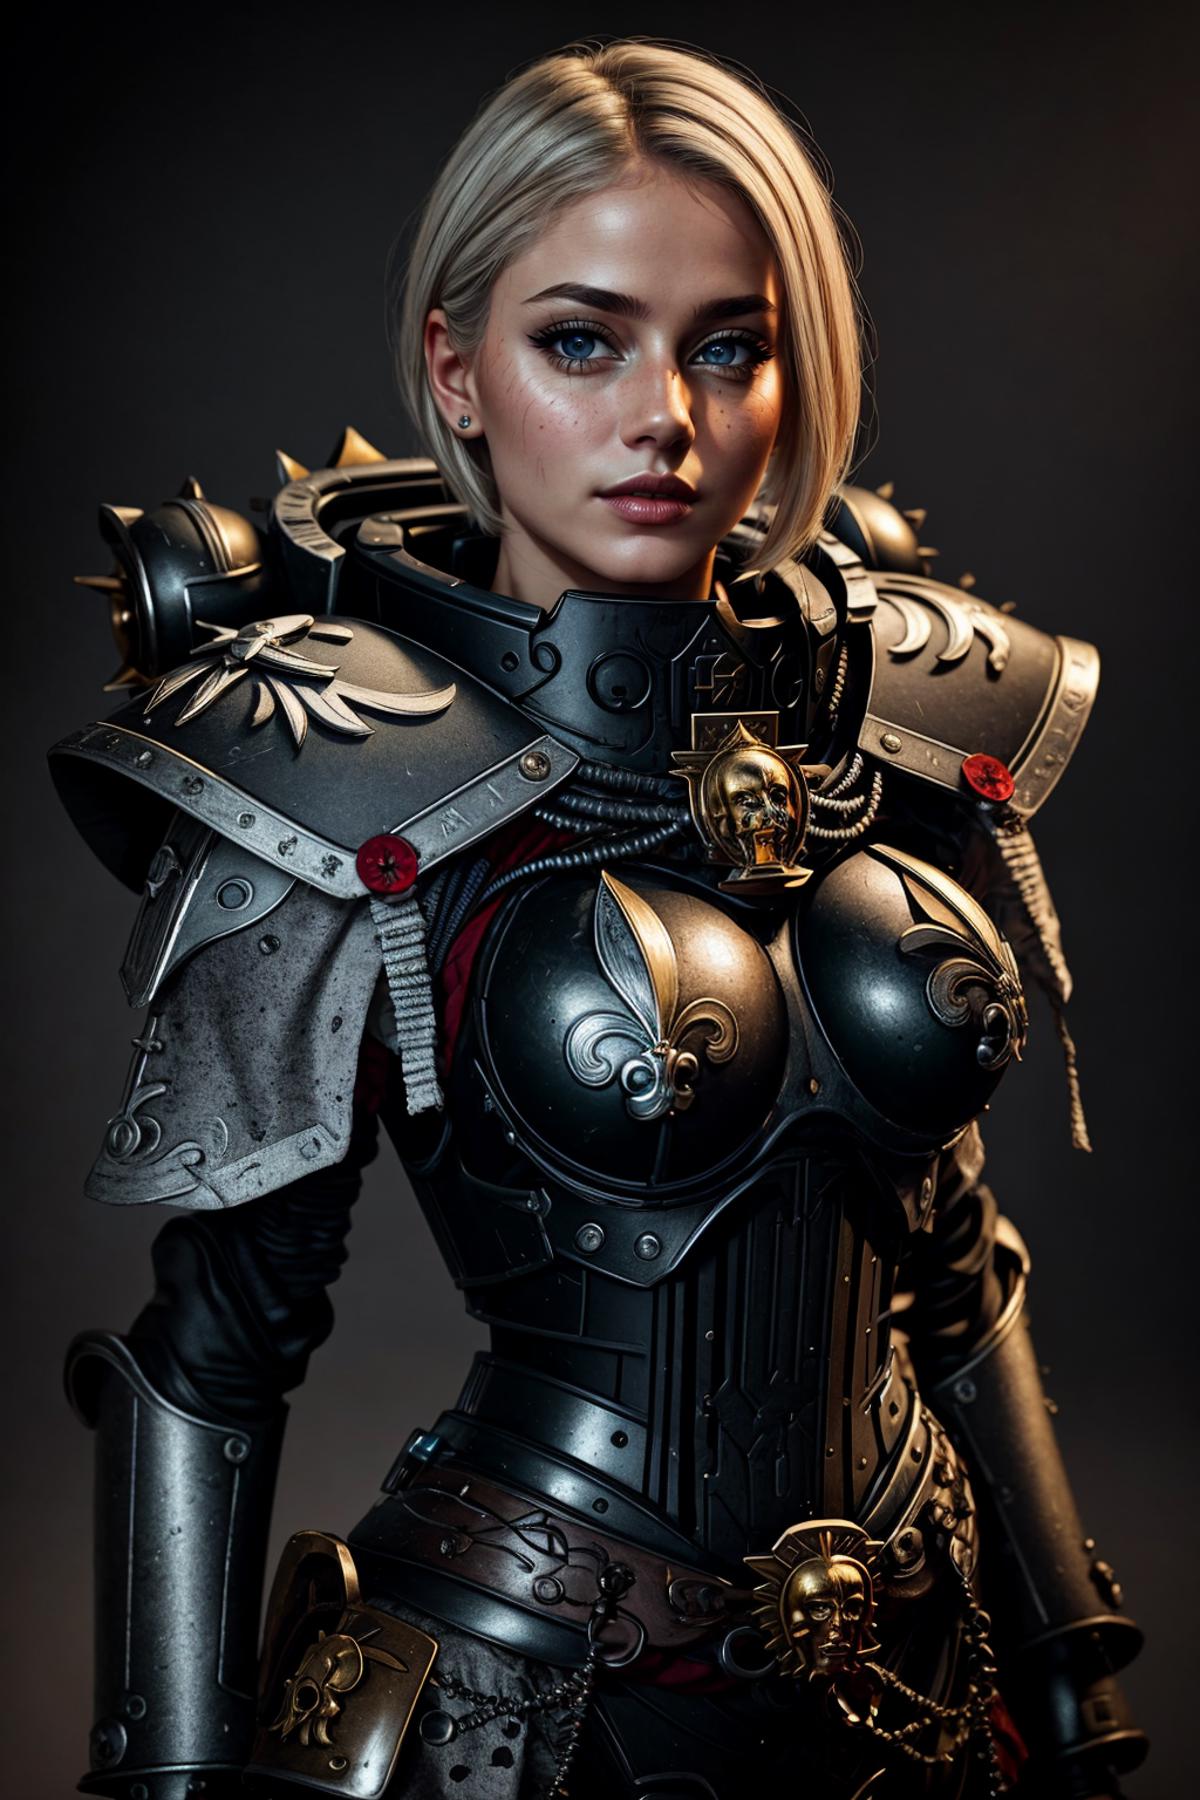 Warhammer 40K Adepta Sororitas Sister of Battle armor - by EDG image by EDG